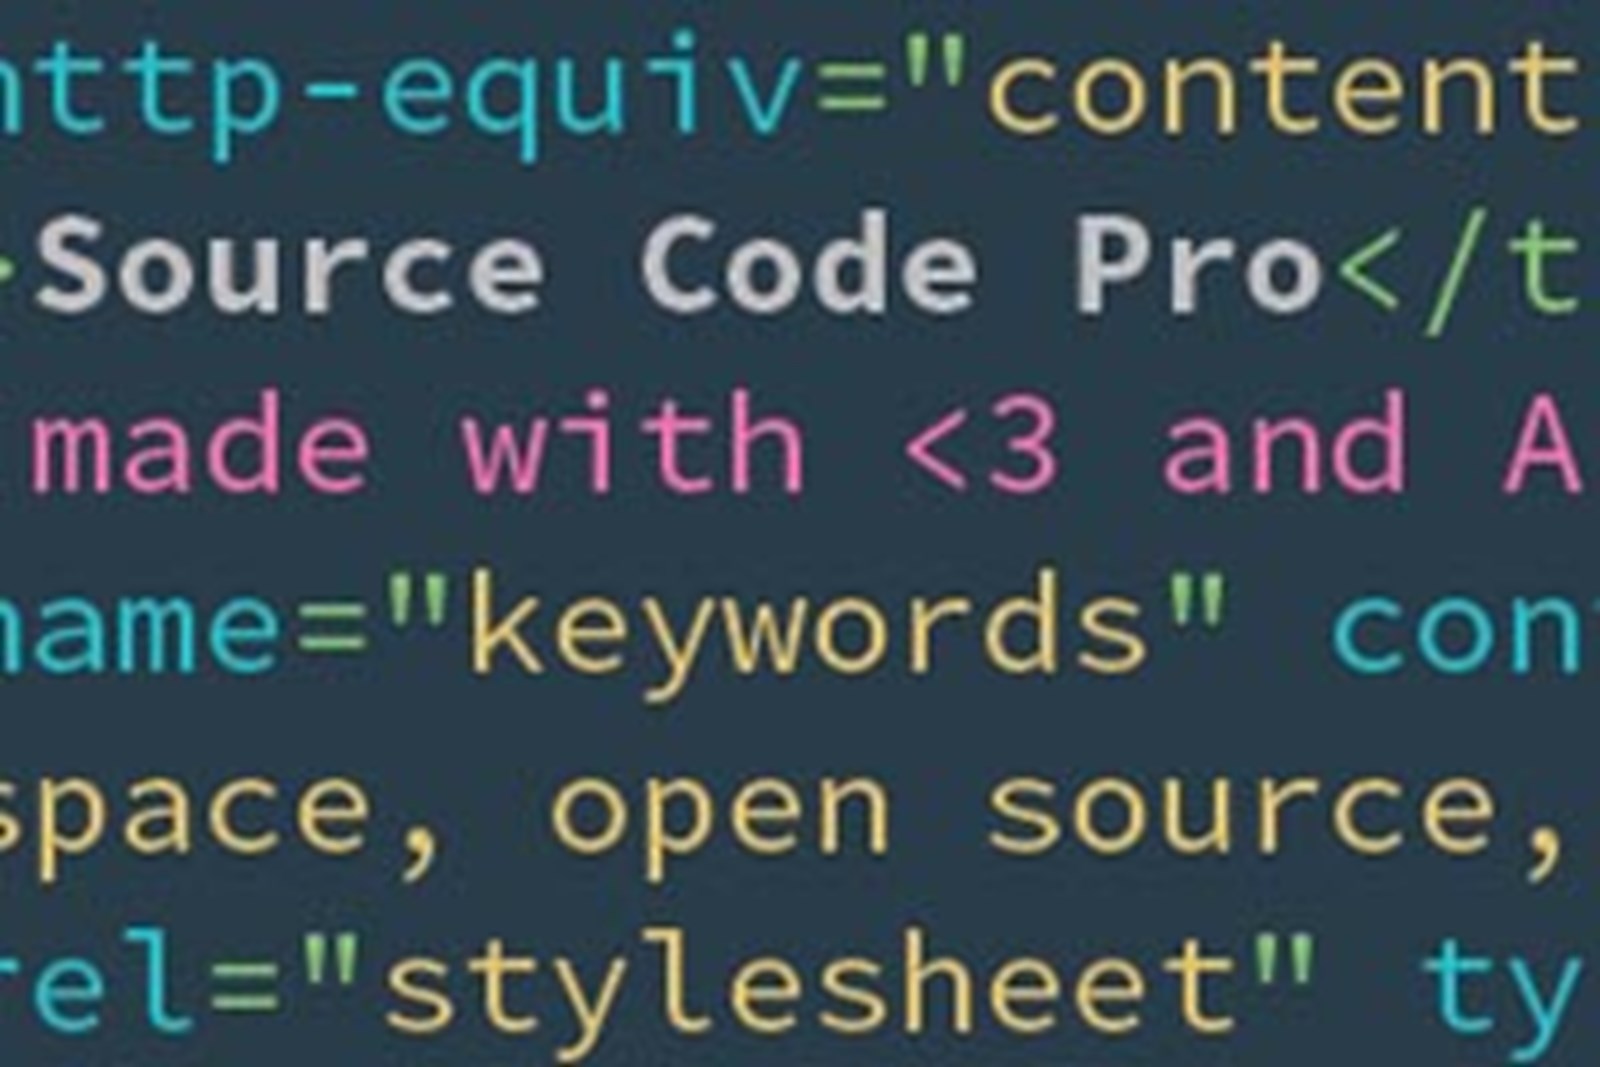 source code pro